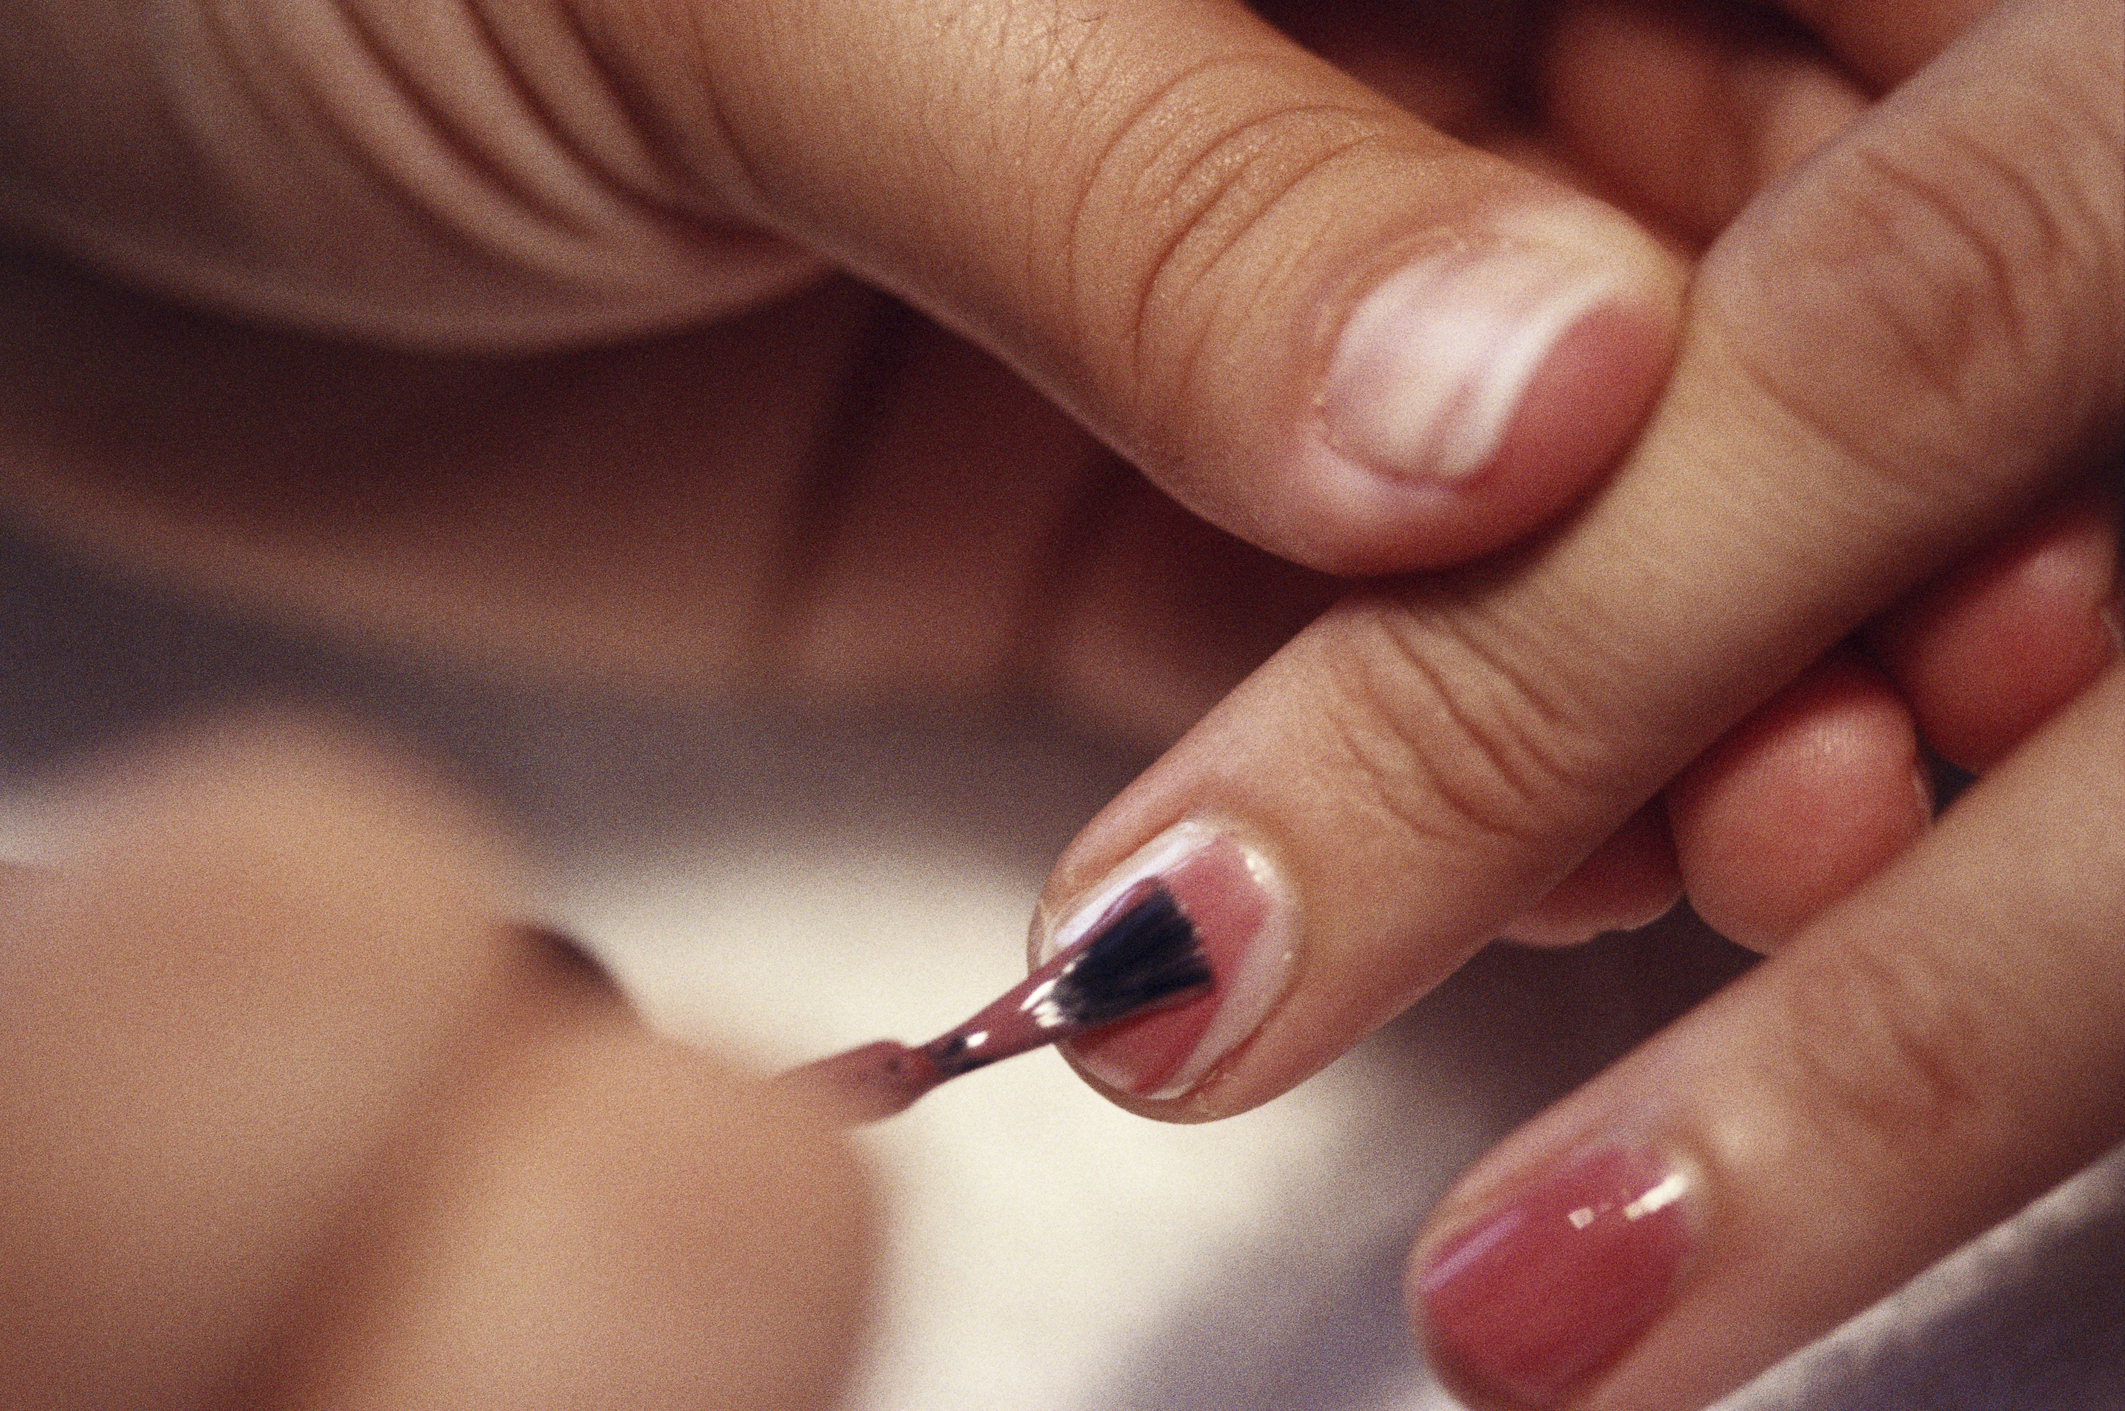 Close-up of a person's hands applying nail polish